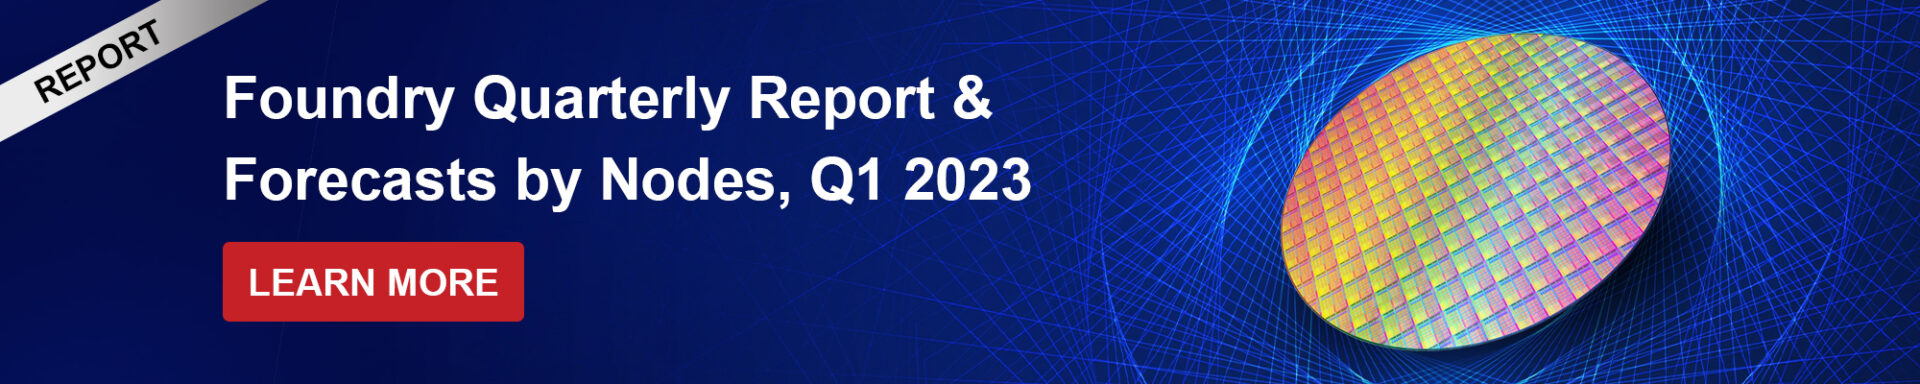 Foundry Quarterly Report and Forecasts Q1 2023